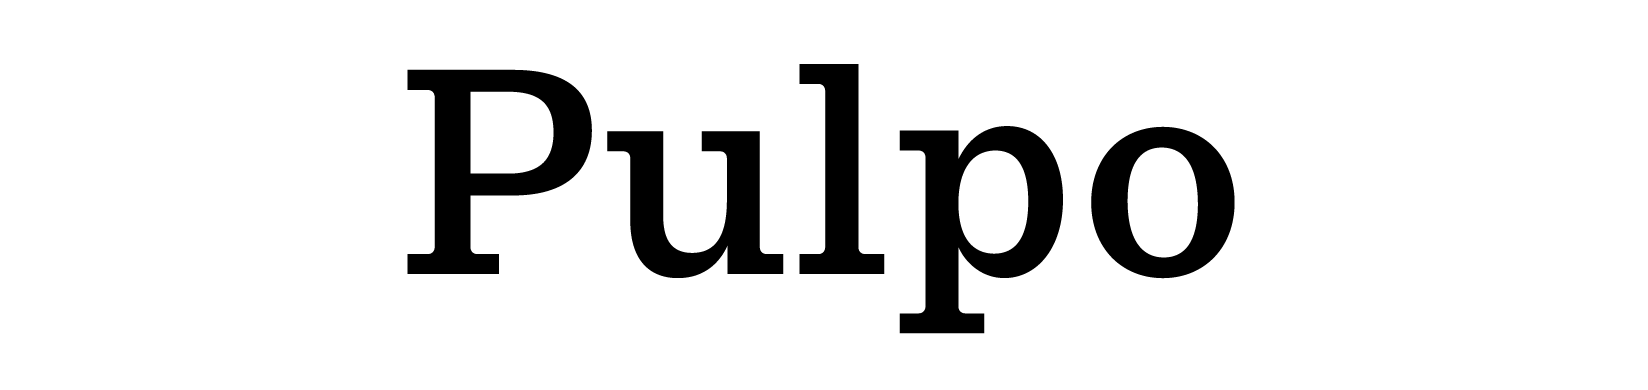 Pulpo Typeface